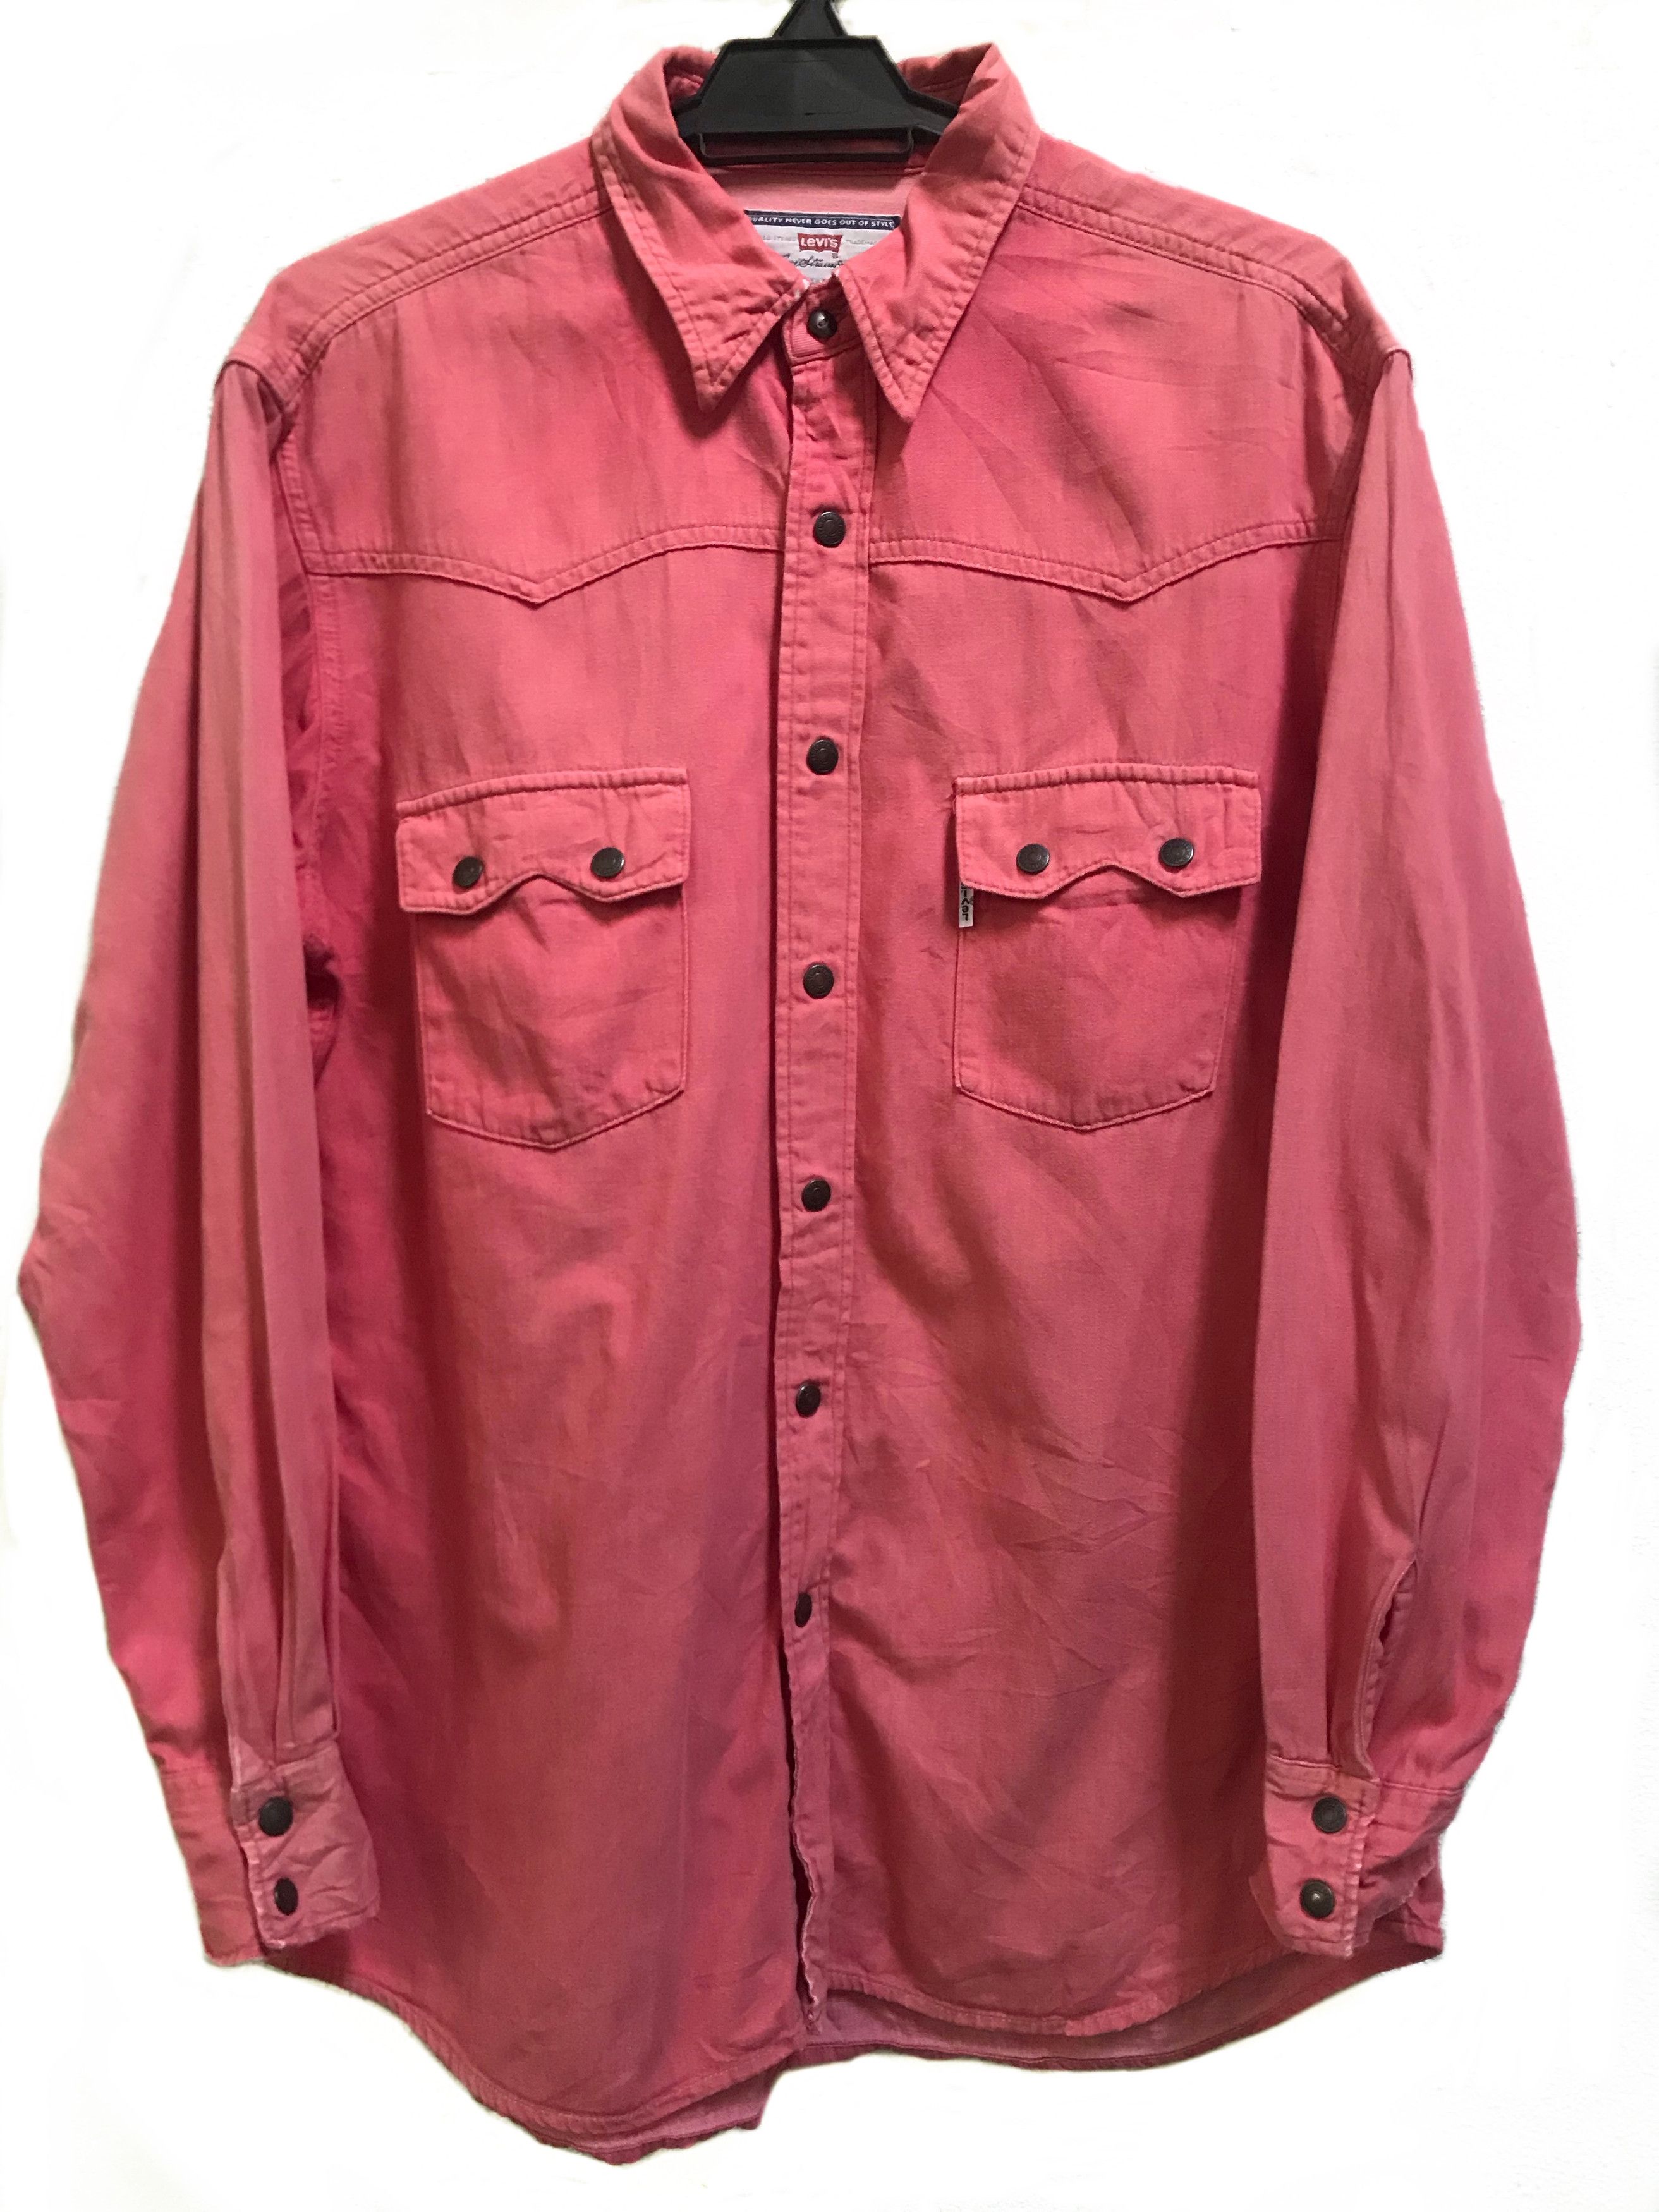 Vintage Levi’s Chambray Button Ups Shirt - 1